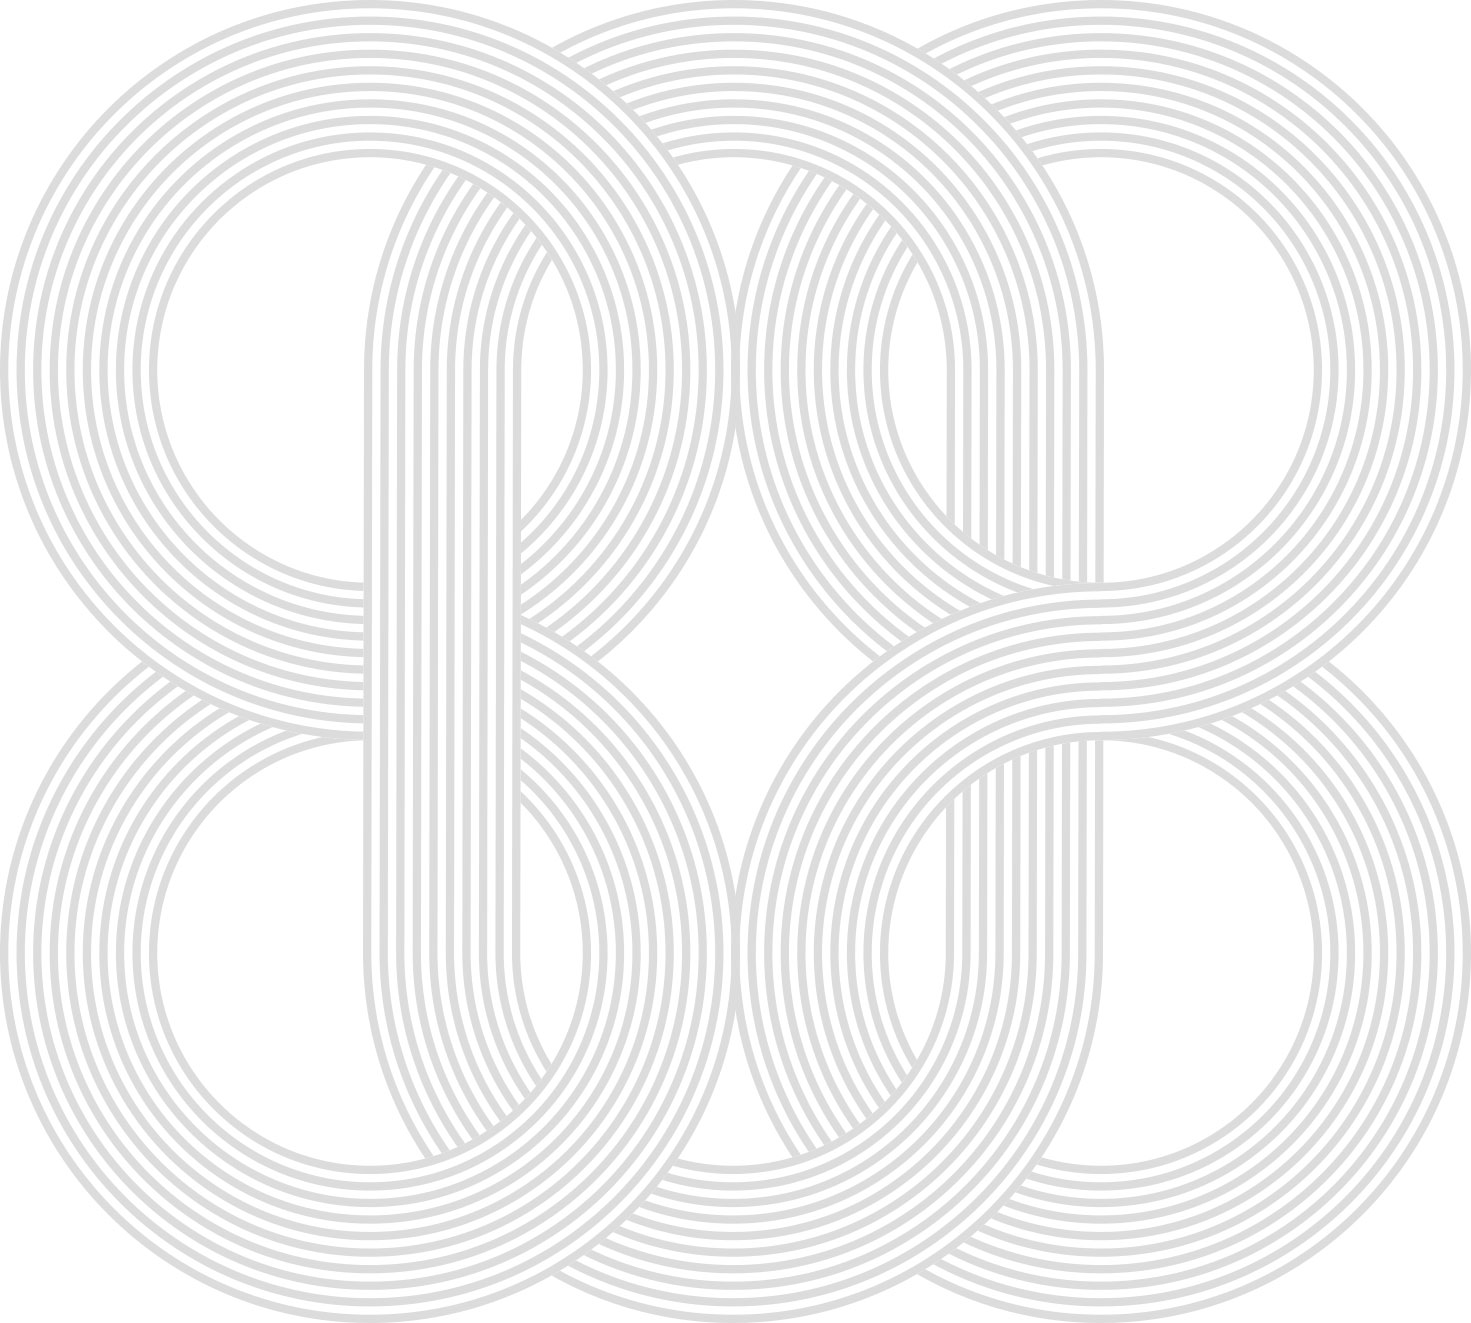 TR-808 logo